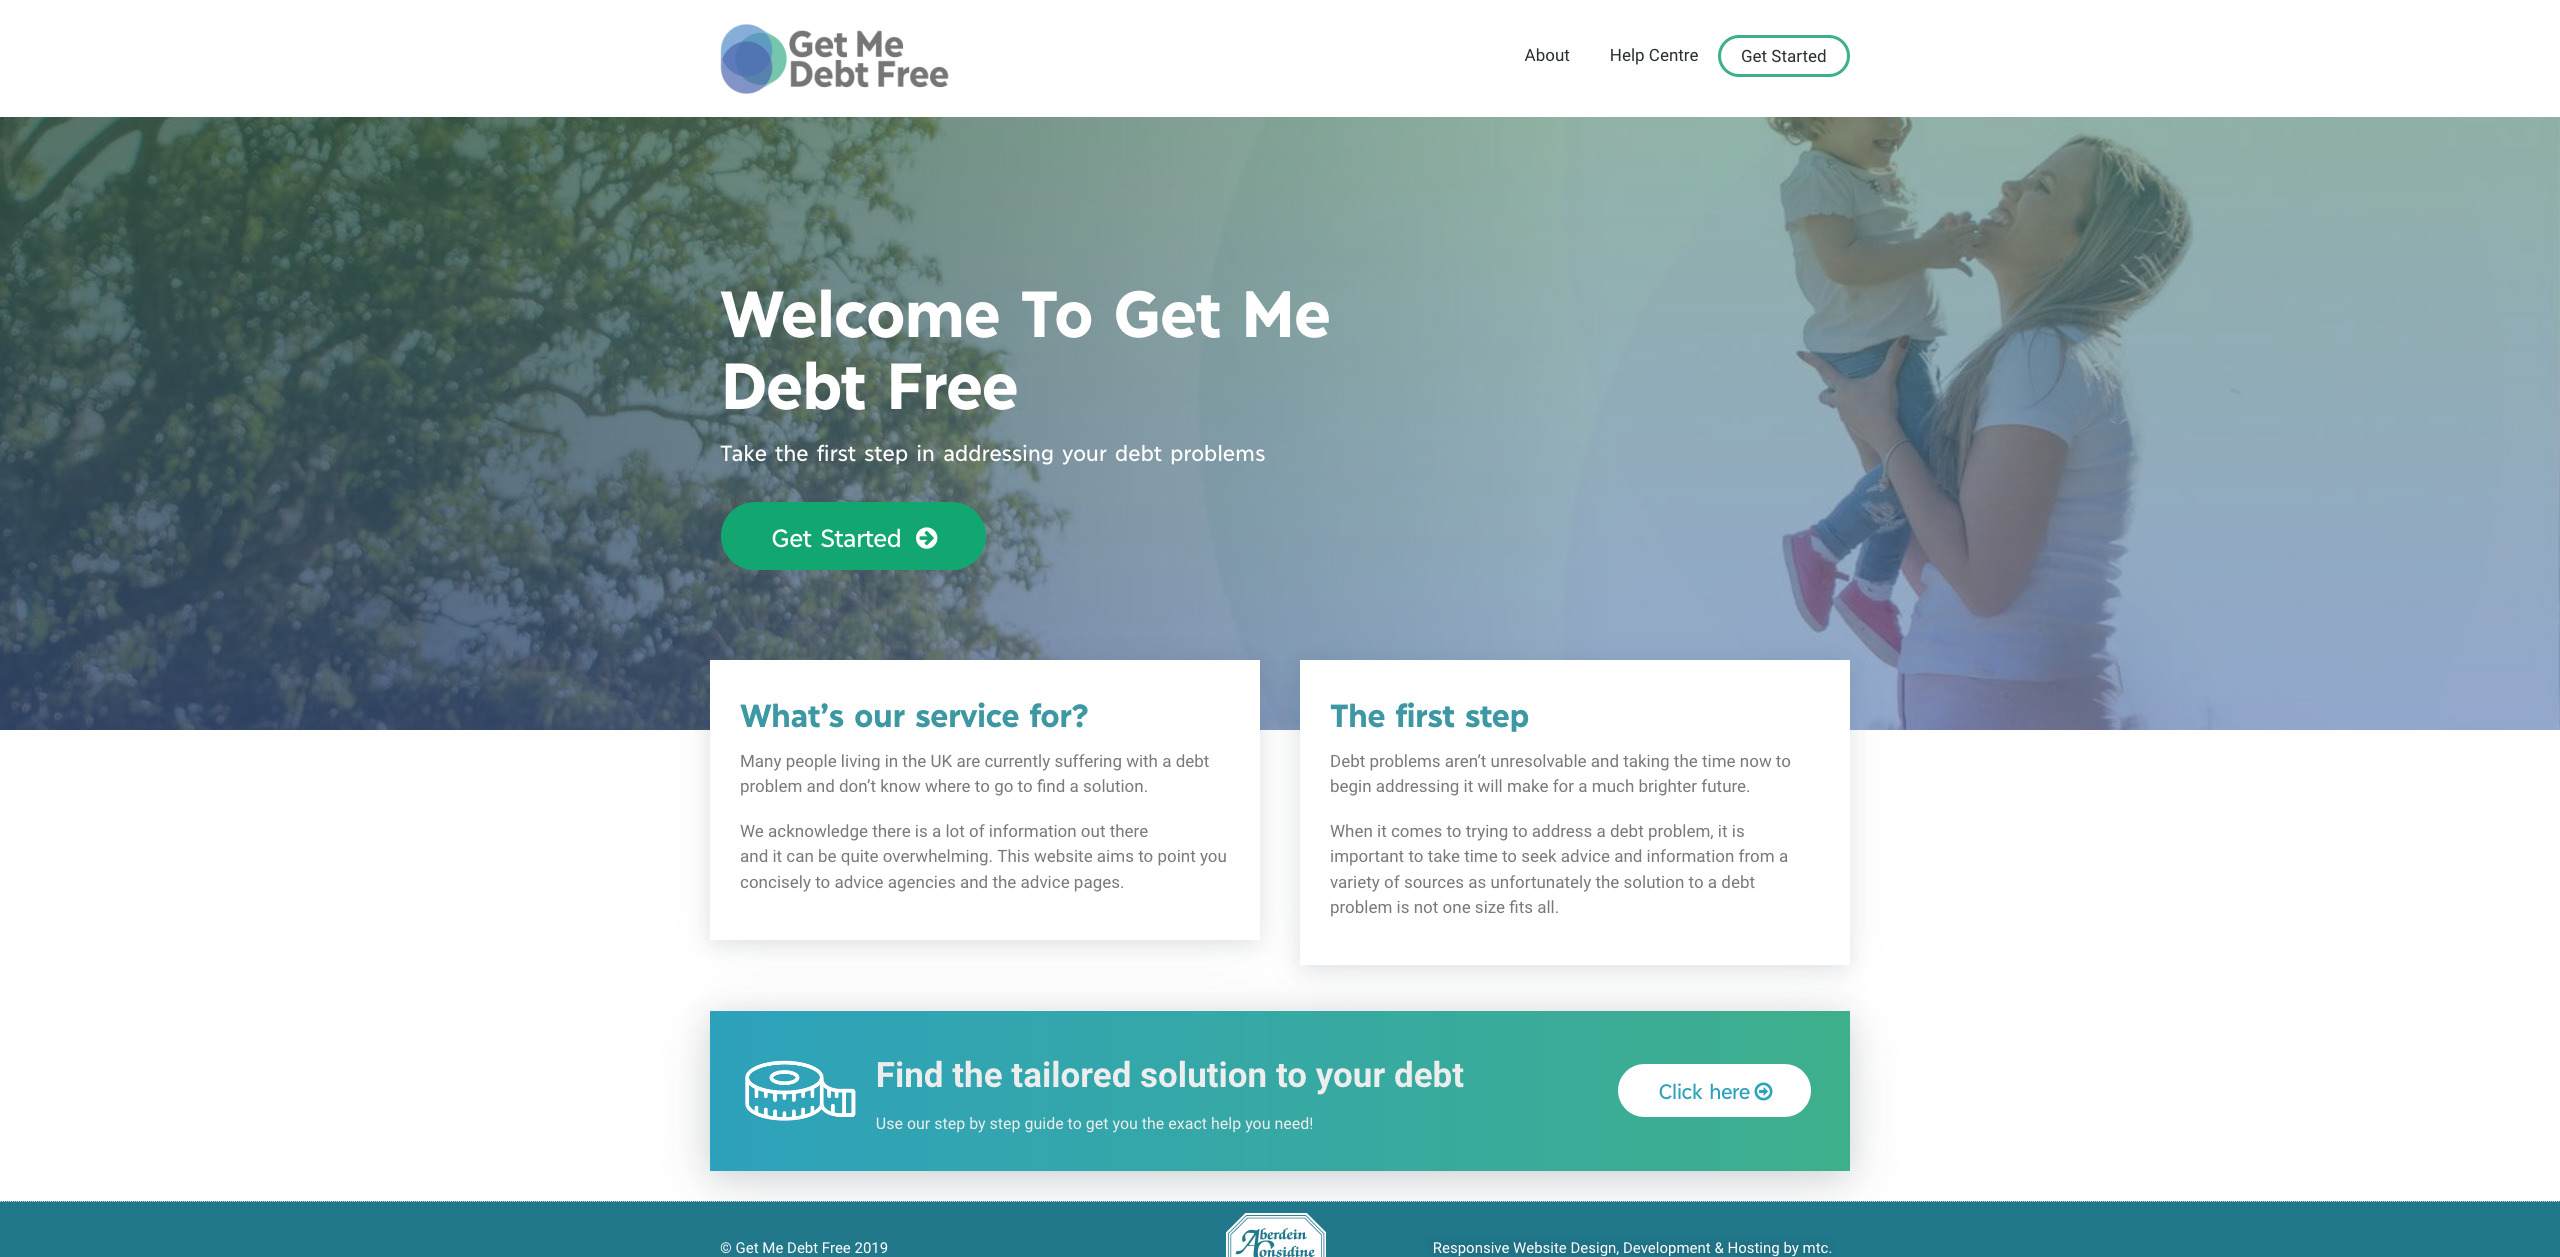 Aberdein Considine launches free consumer debt advice service